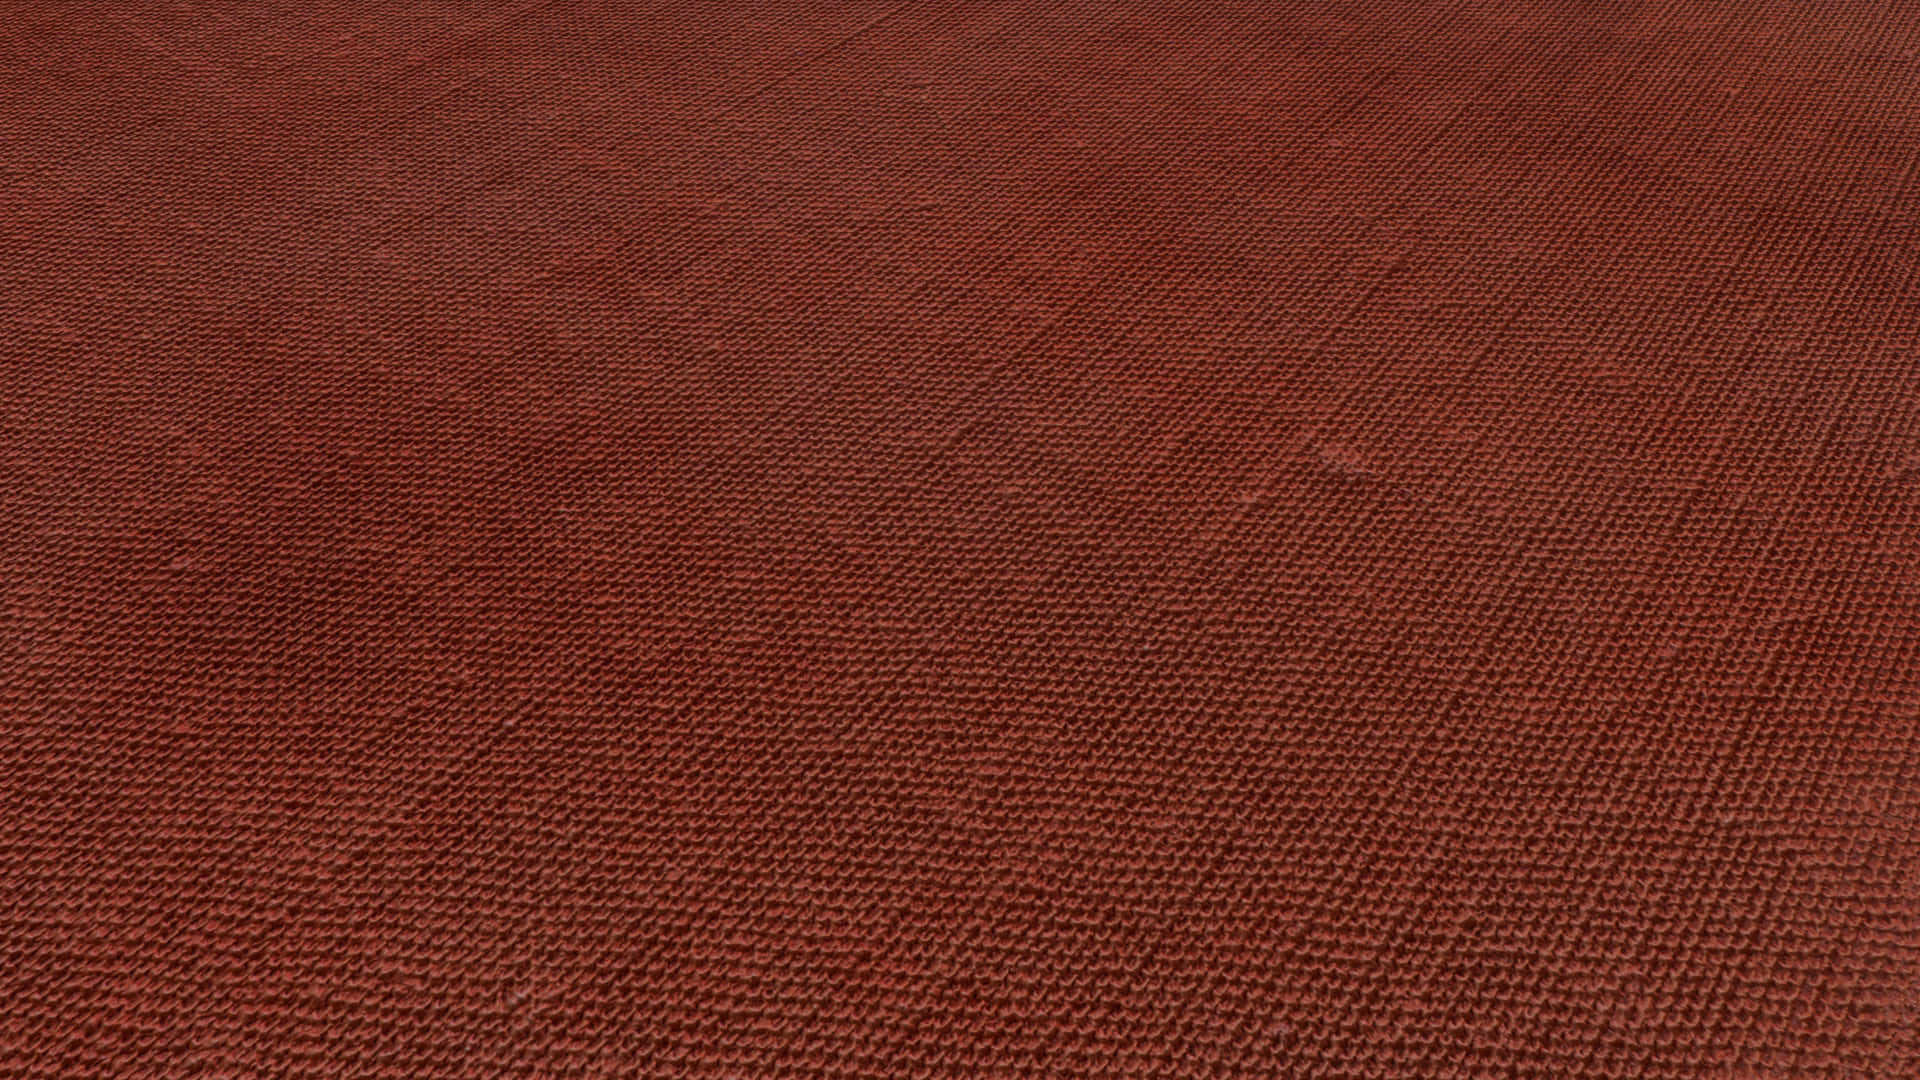 Maroon Fabric Texture Wallpaper